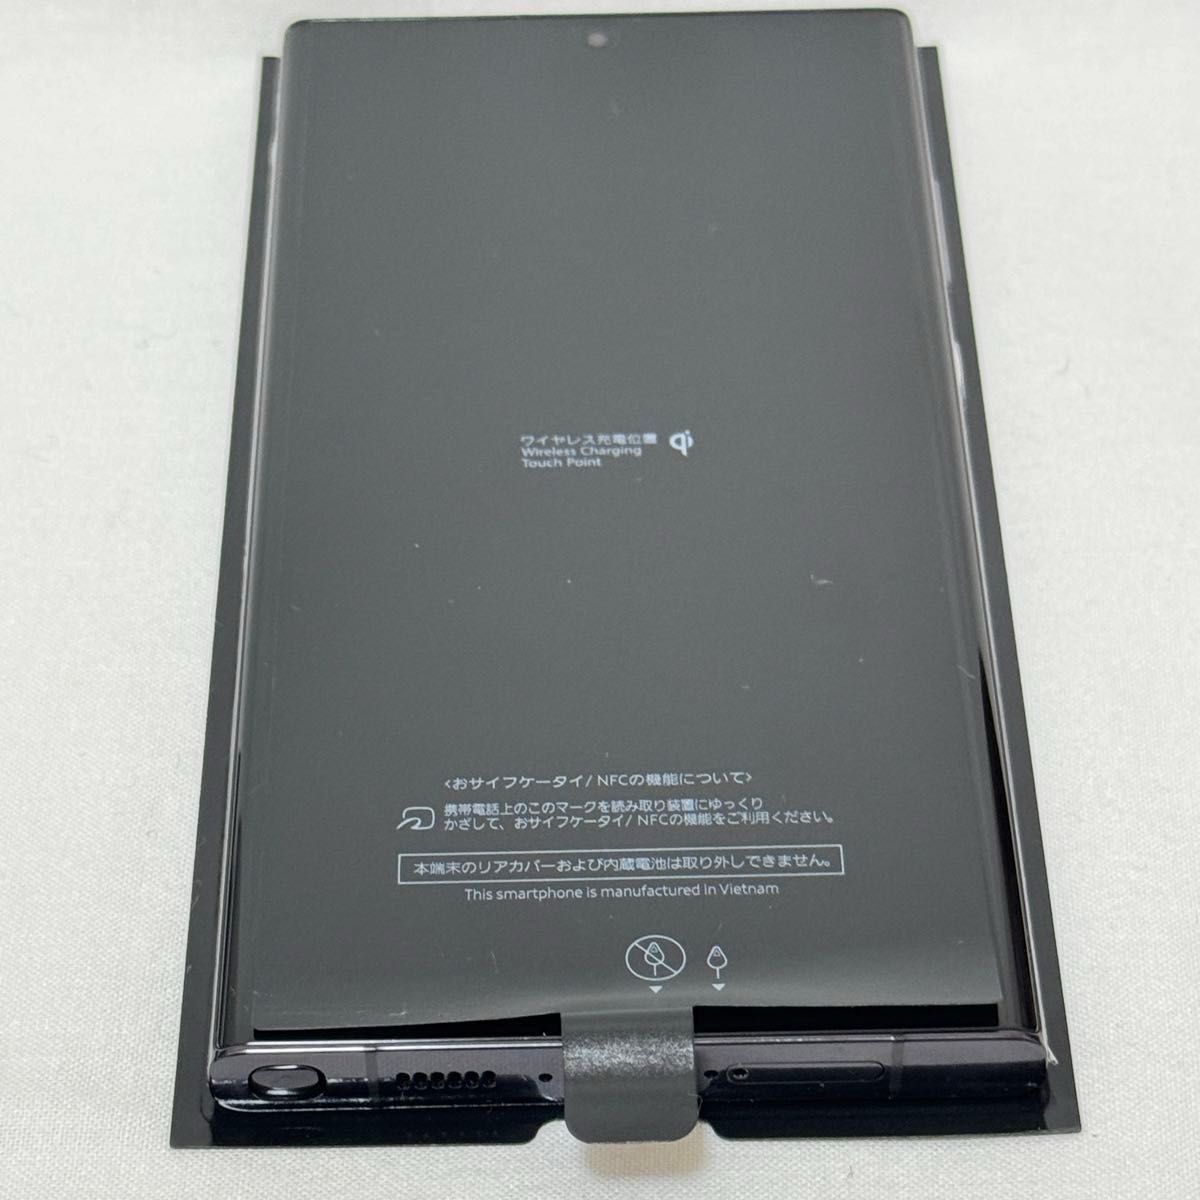  Galaxy S23 Ultra SCG20 ファントム ブラック512GB